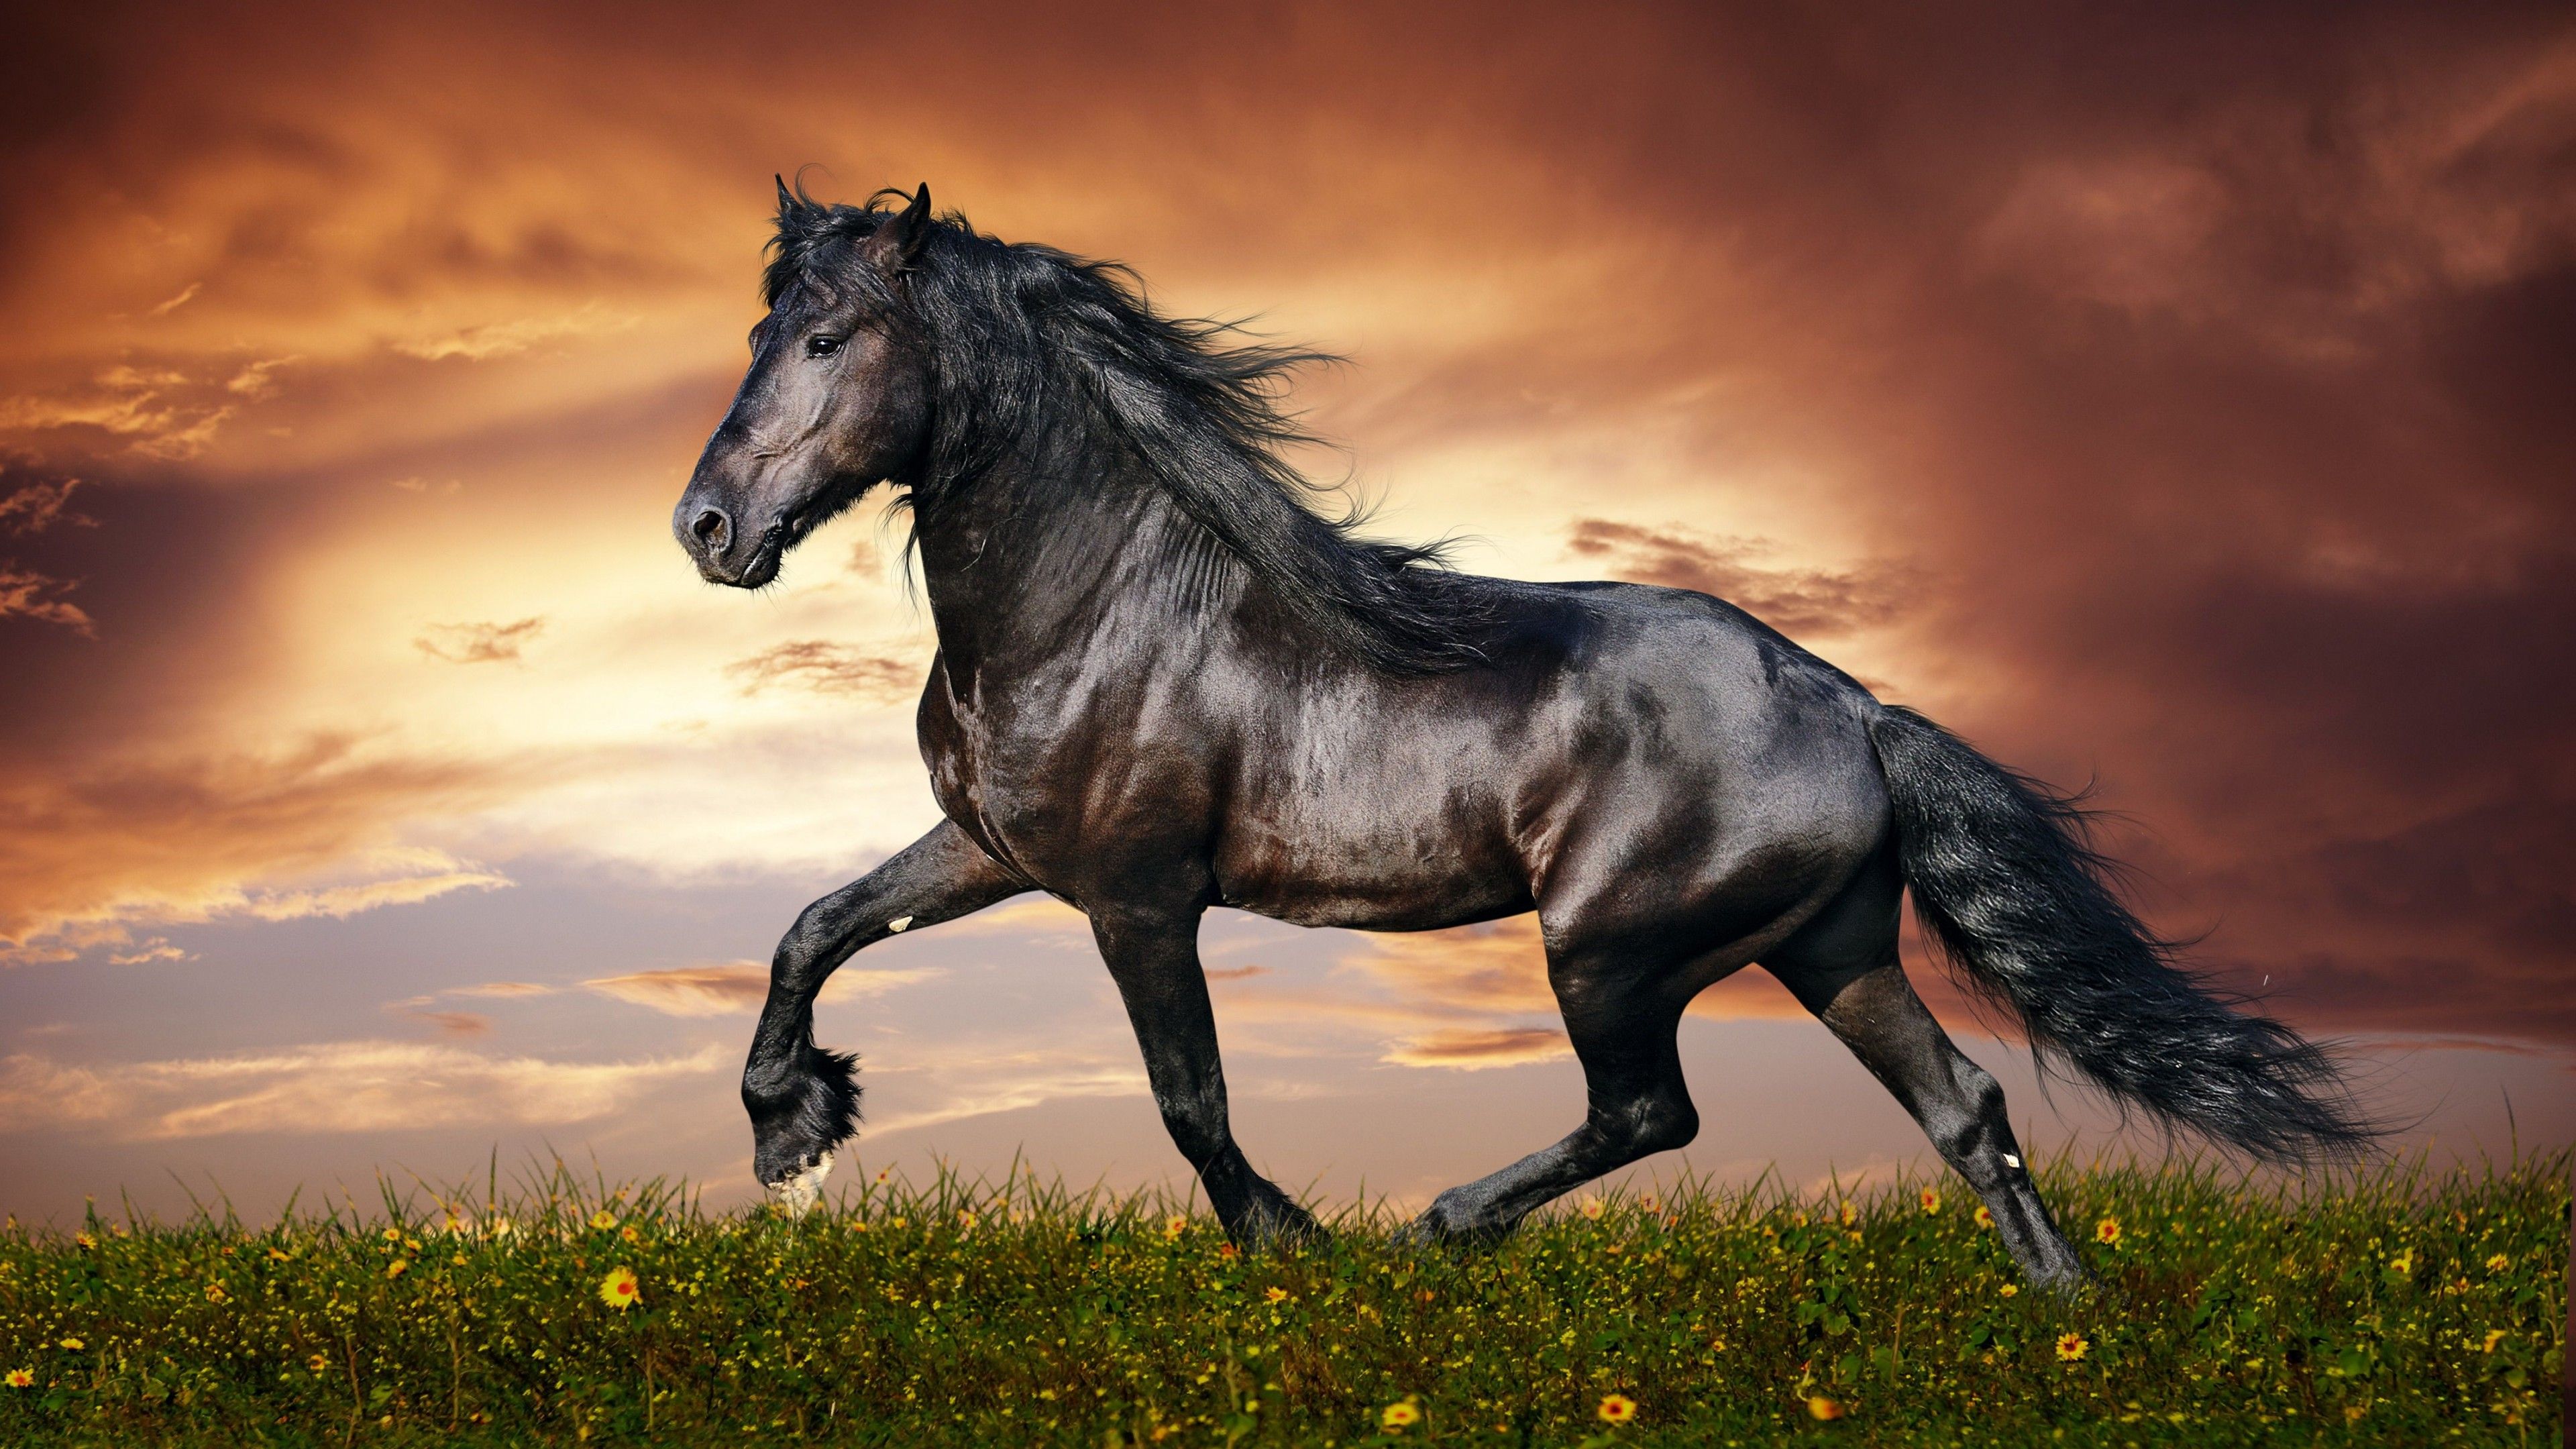 Wallpaper horse, 5k, 4k wallpaper, hooves, mane, galloping, black, sunset, green grass, sky, clouds, OS